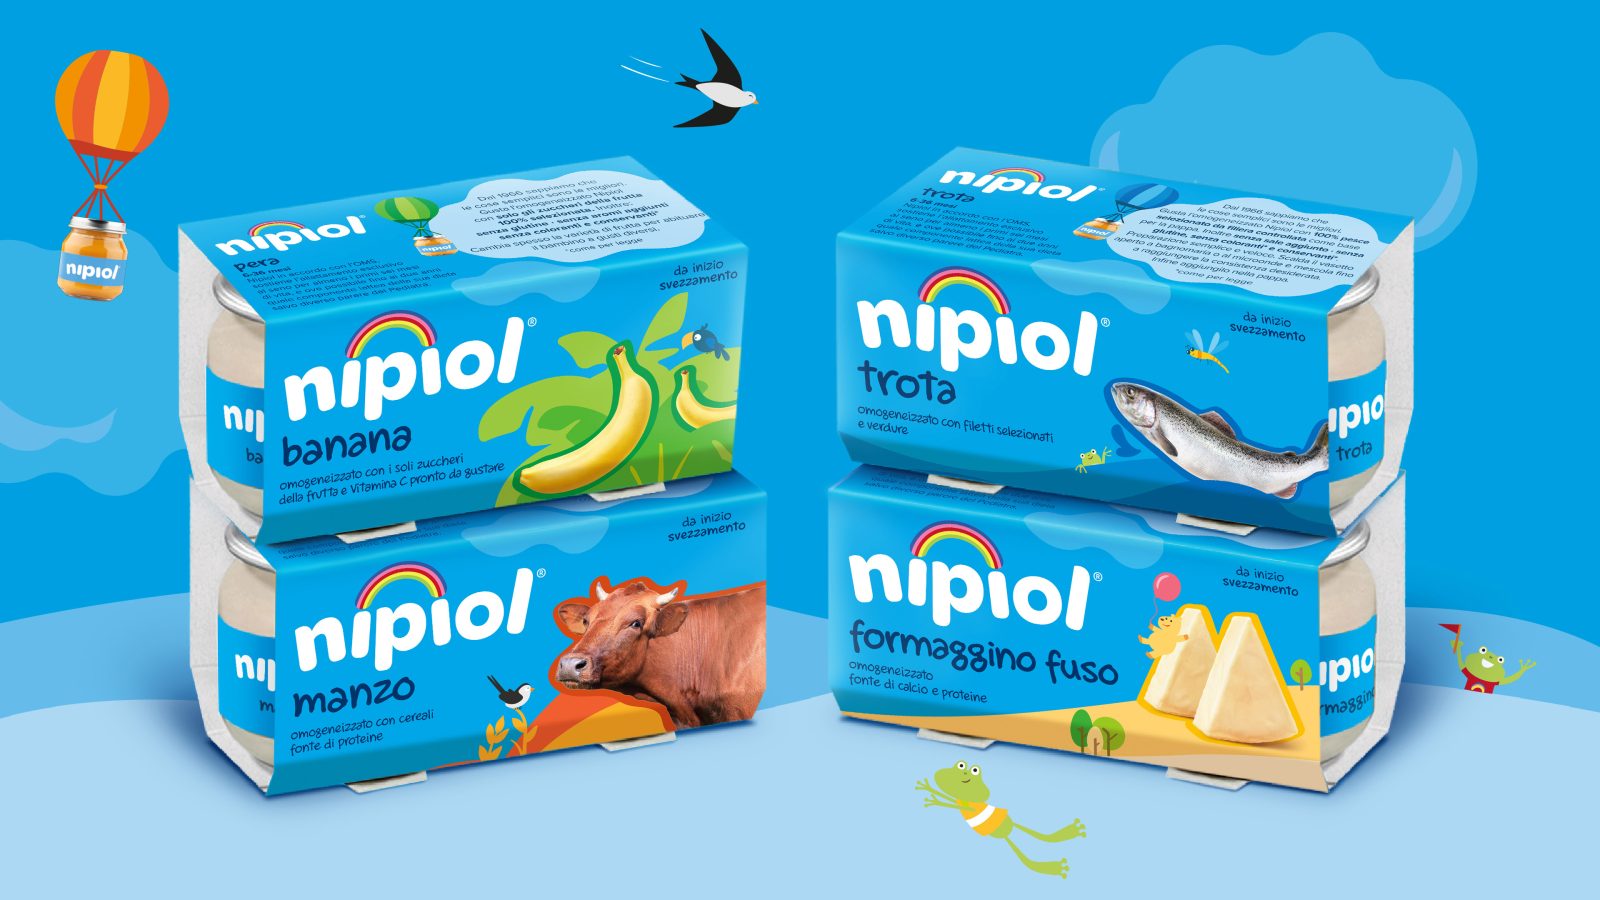 Design Identity New Packaging World Nipiol Society Total Rebranding - and Brand